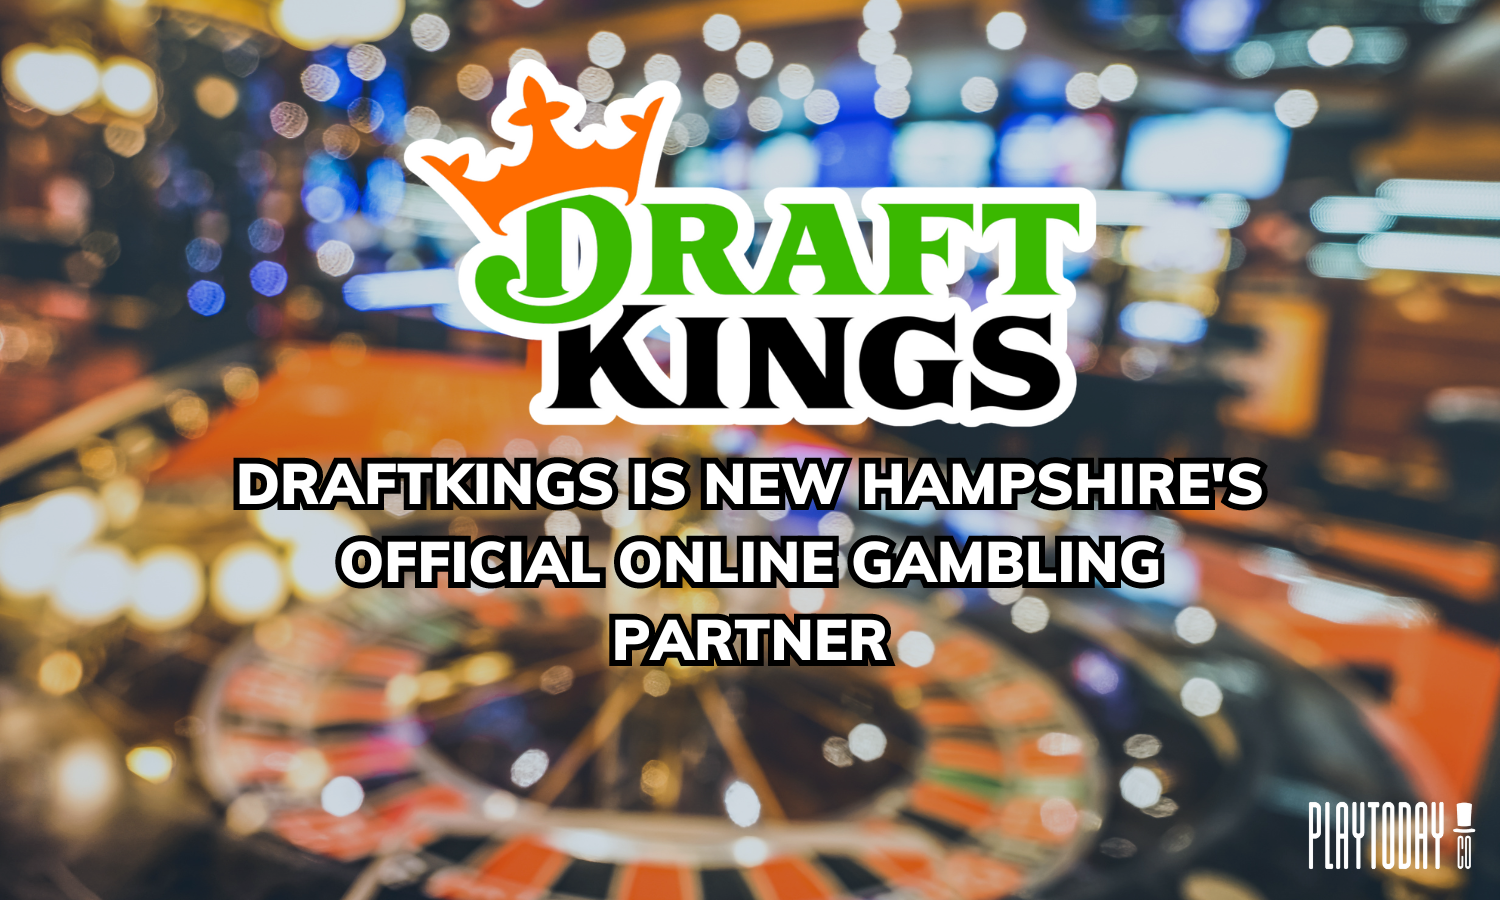 DraftKings and New Hampshire Partnership Visualizer